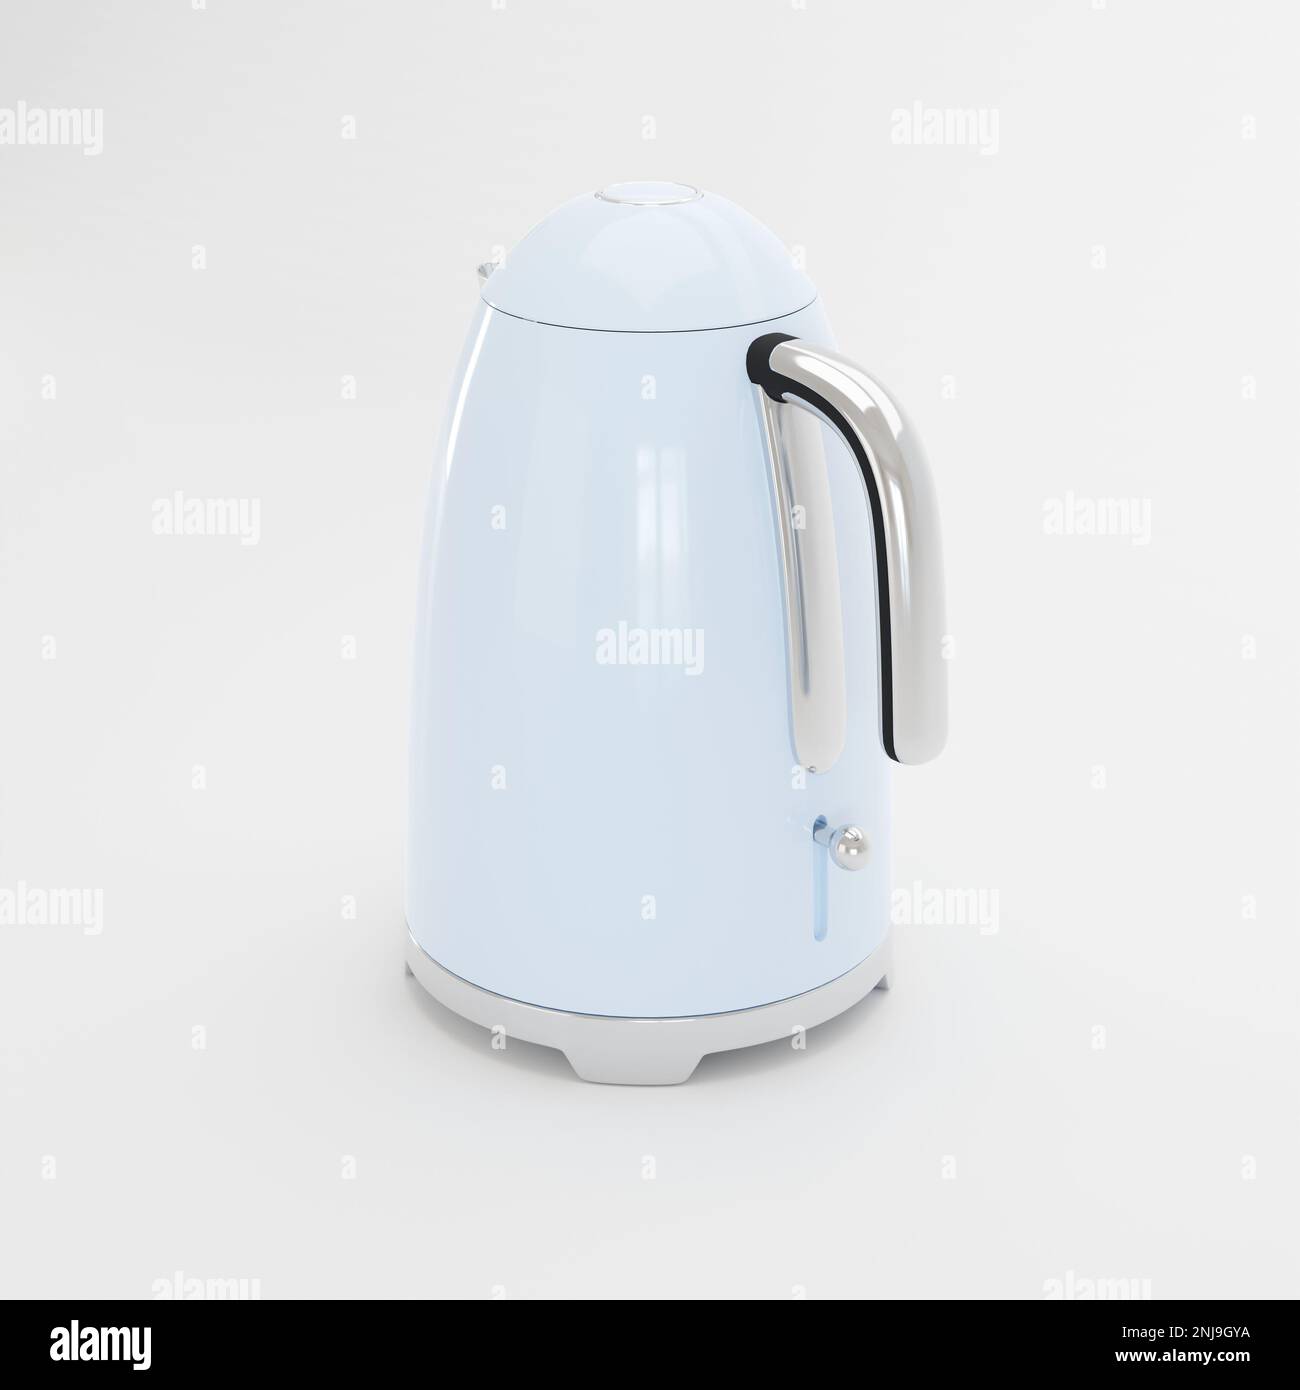 https://c8.alamy.com/comp/2NJ9GYA/3d-rendering-light-blue-vintage-electric-kettle-stainless-steel-base-and-handle-2NJ9GYA.jpg